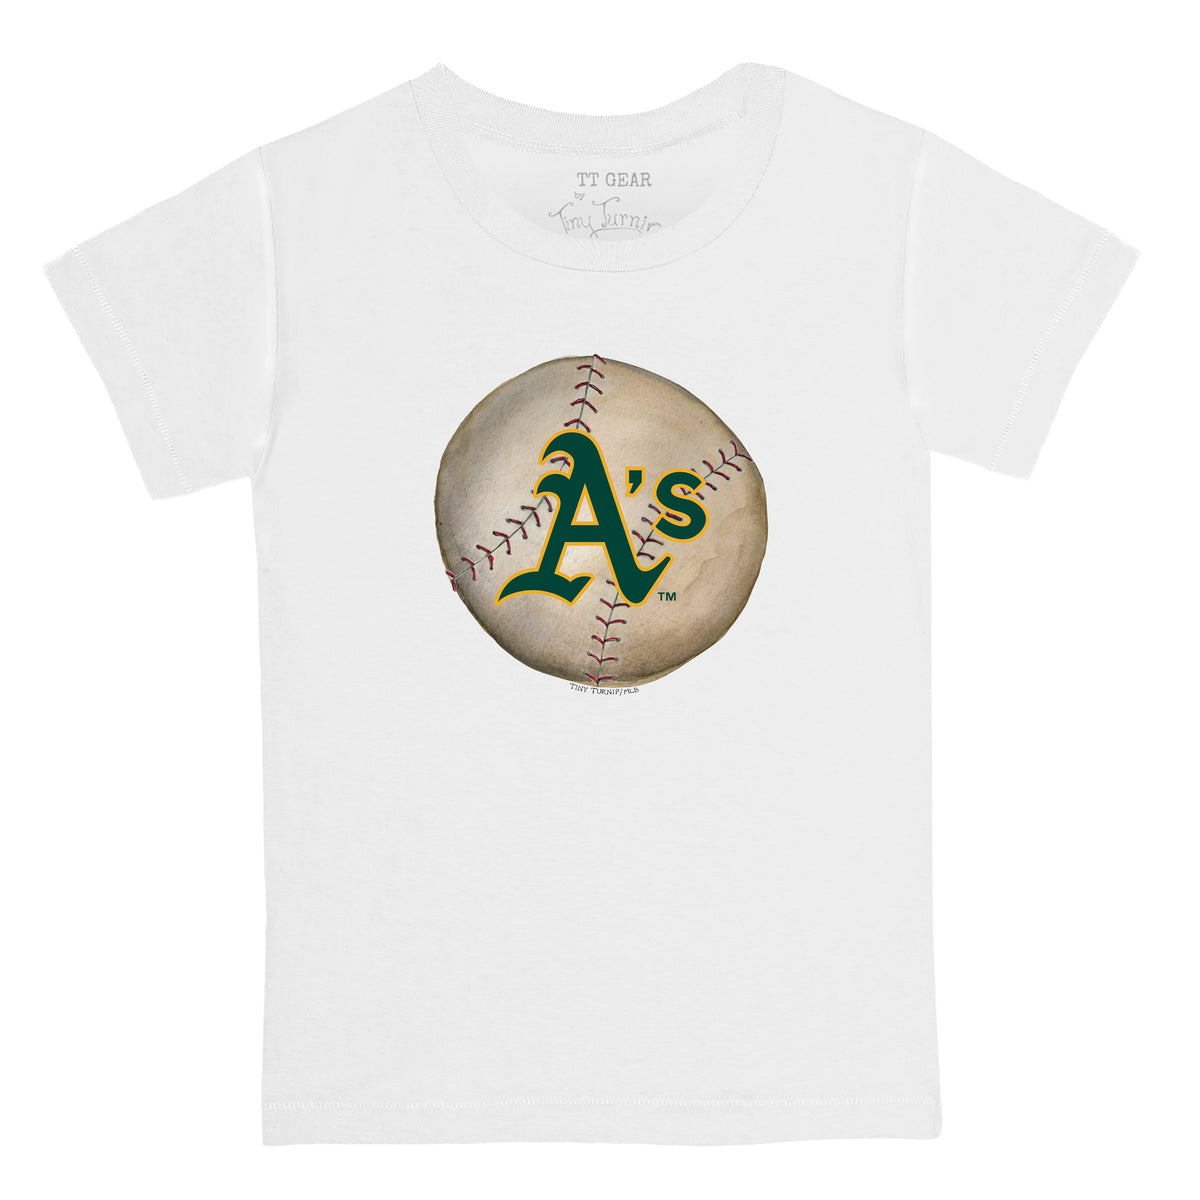 Toddler Tiny Turnip White St. Louis Cardinals Baseball Tear T-Shirt Size: 4T